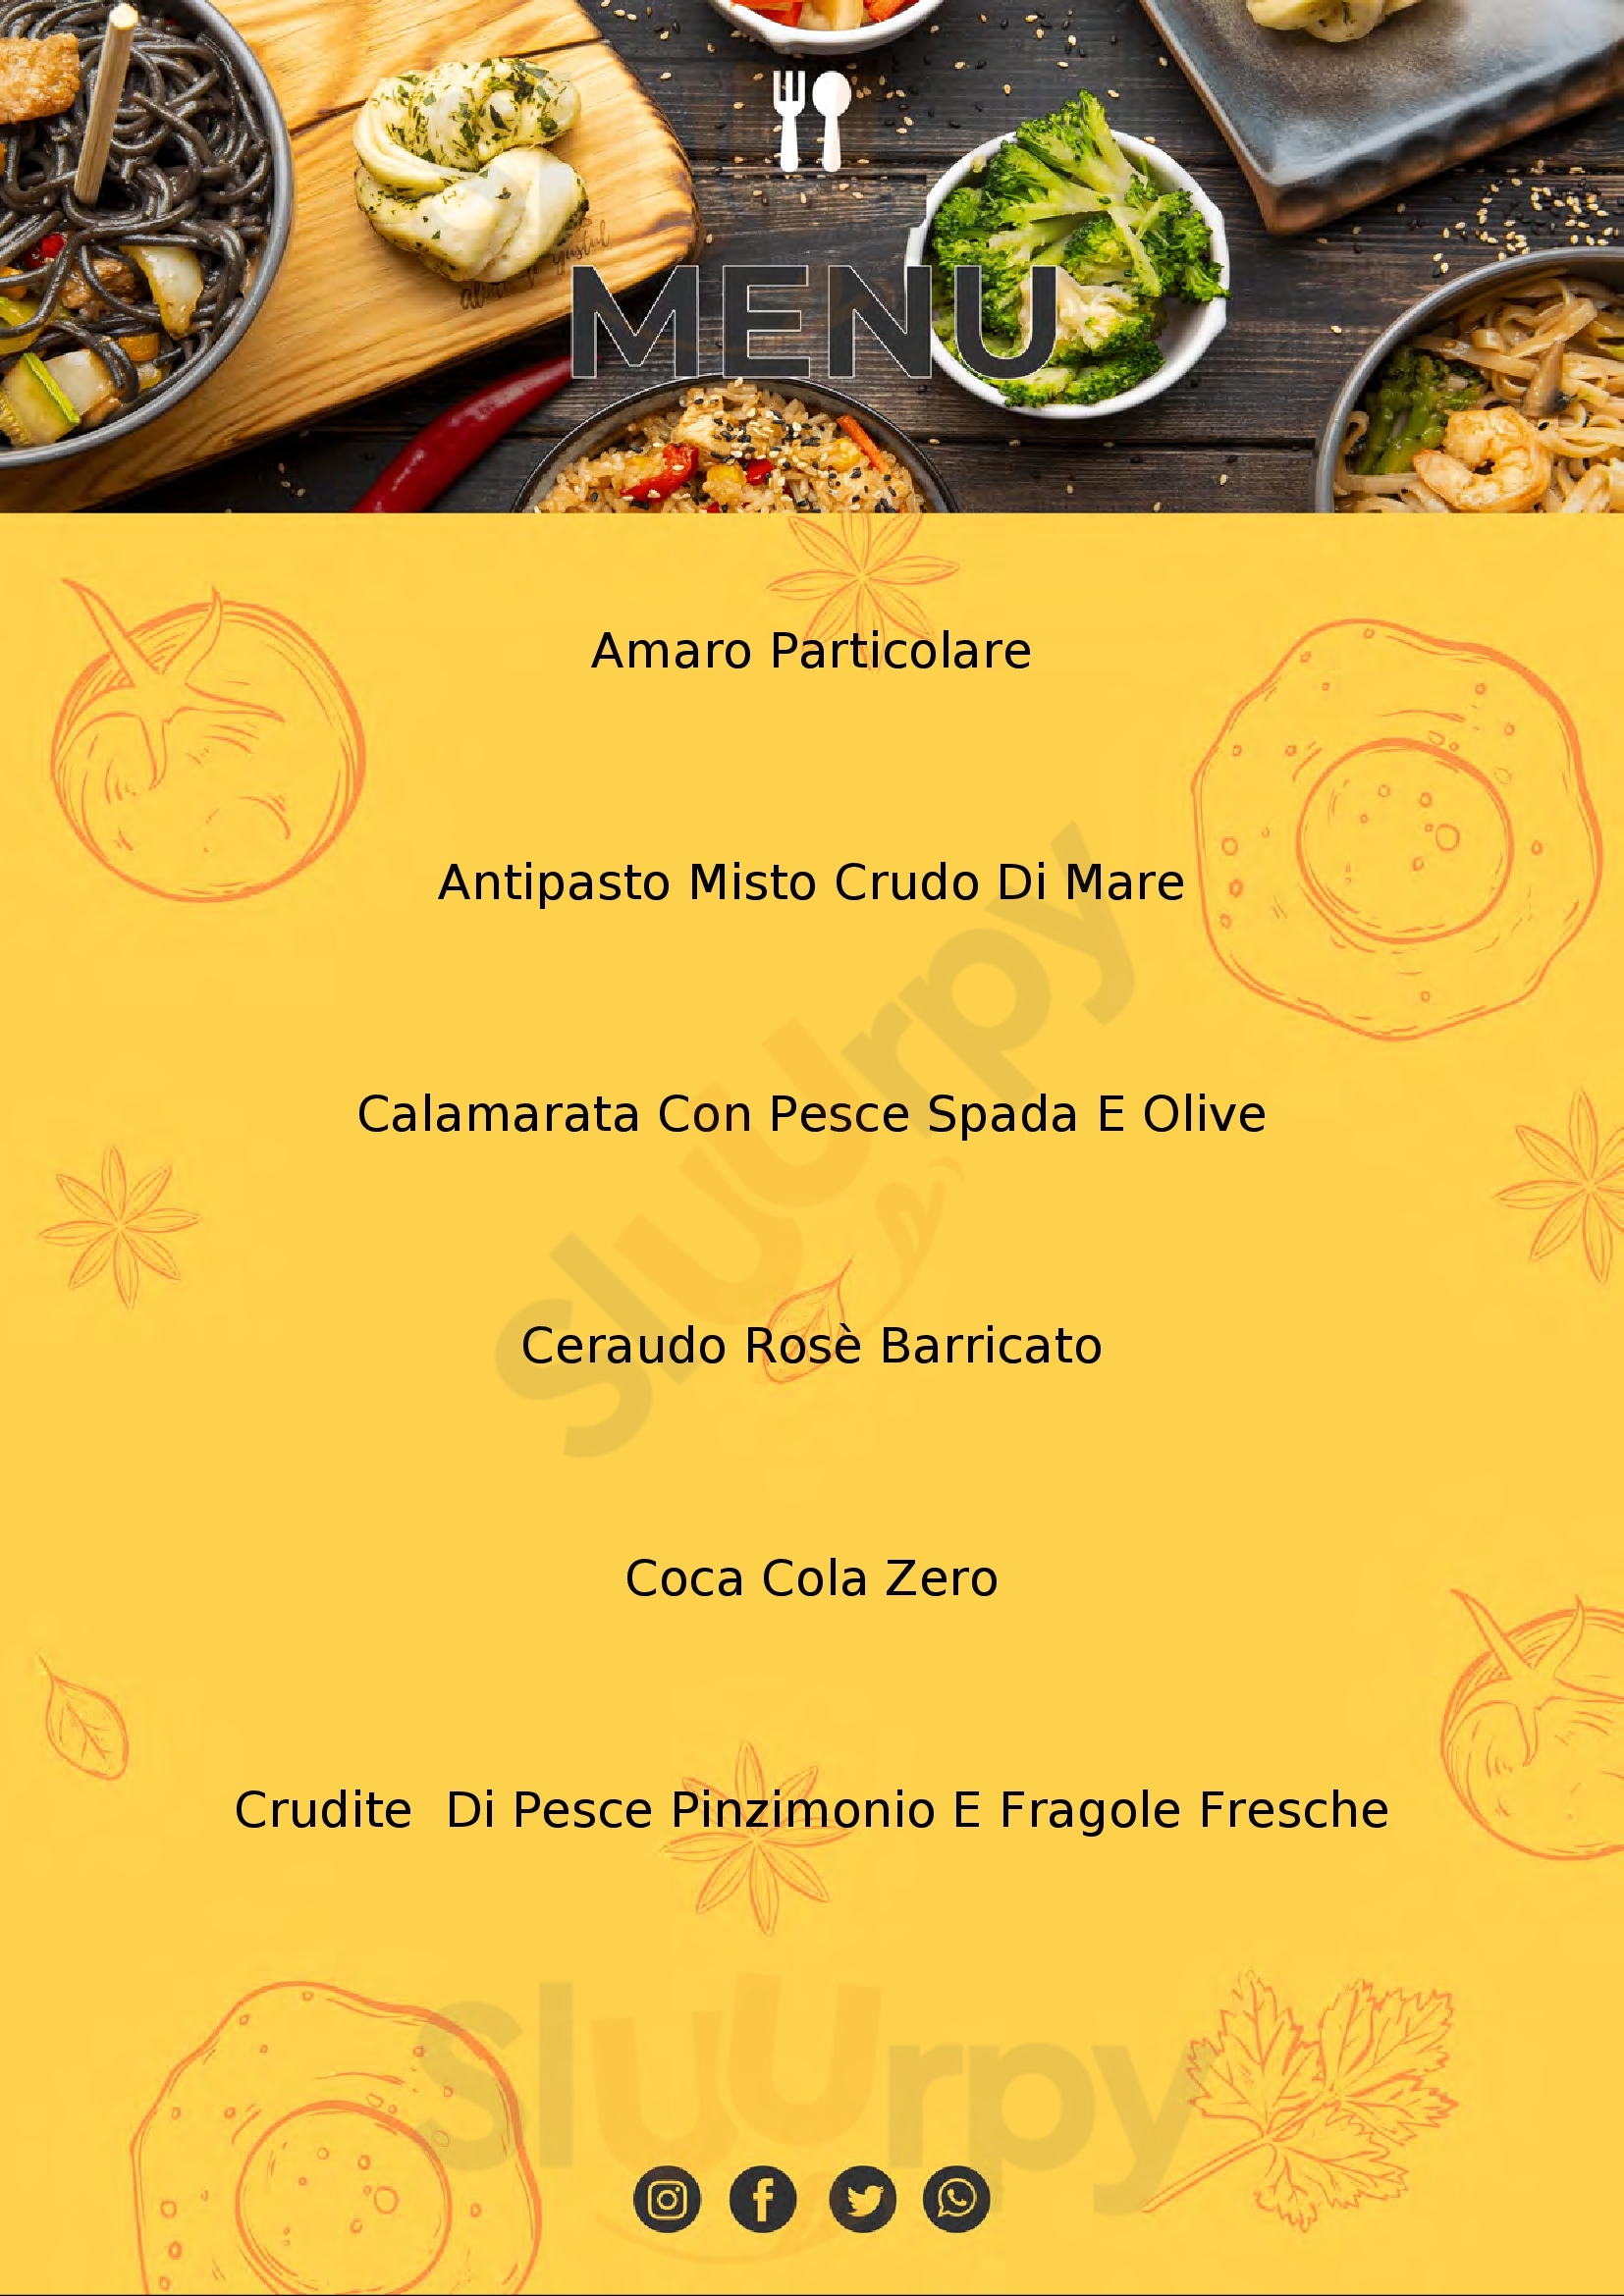 MoVì Restaurant Catanzaro menù 1 pagina